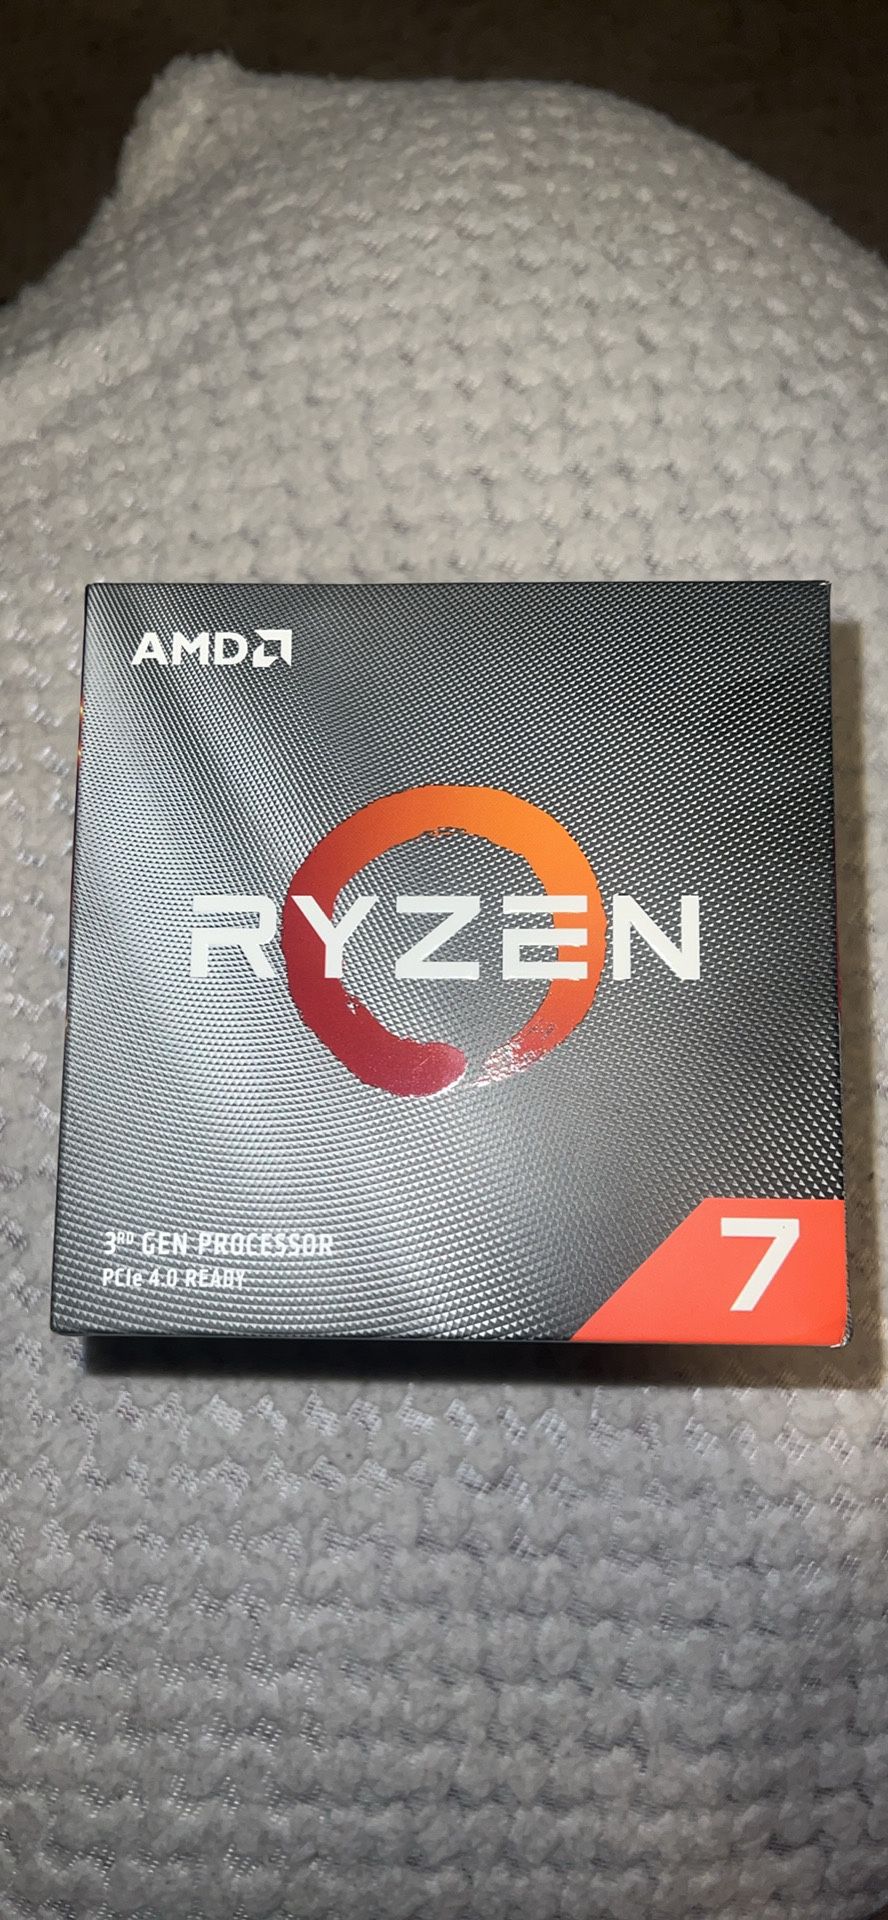 AMD Ryzen 7 3700x  8core, 16 thread processor